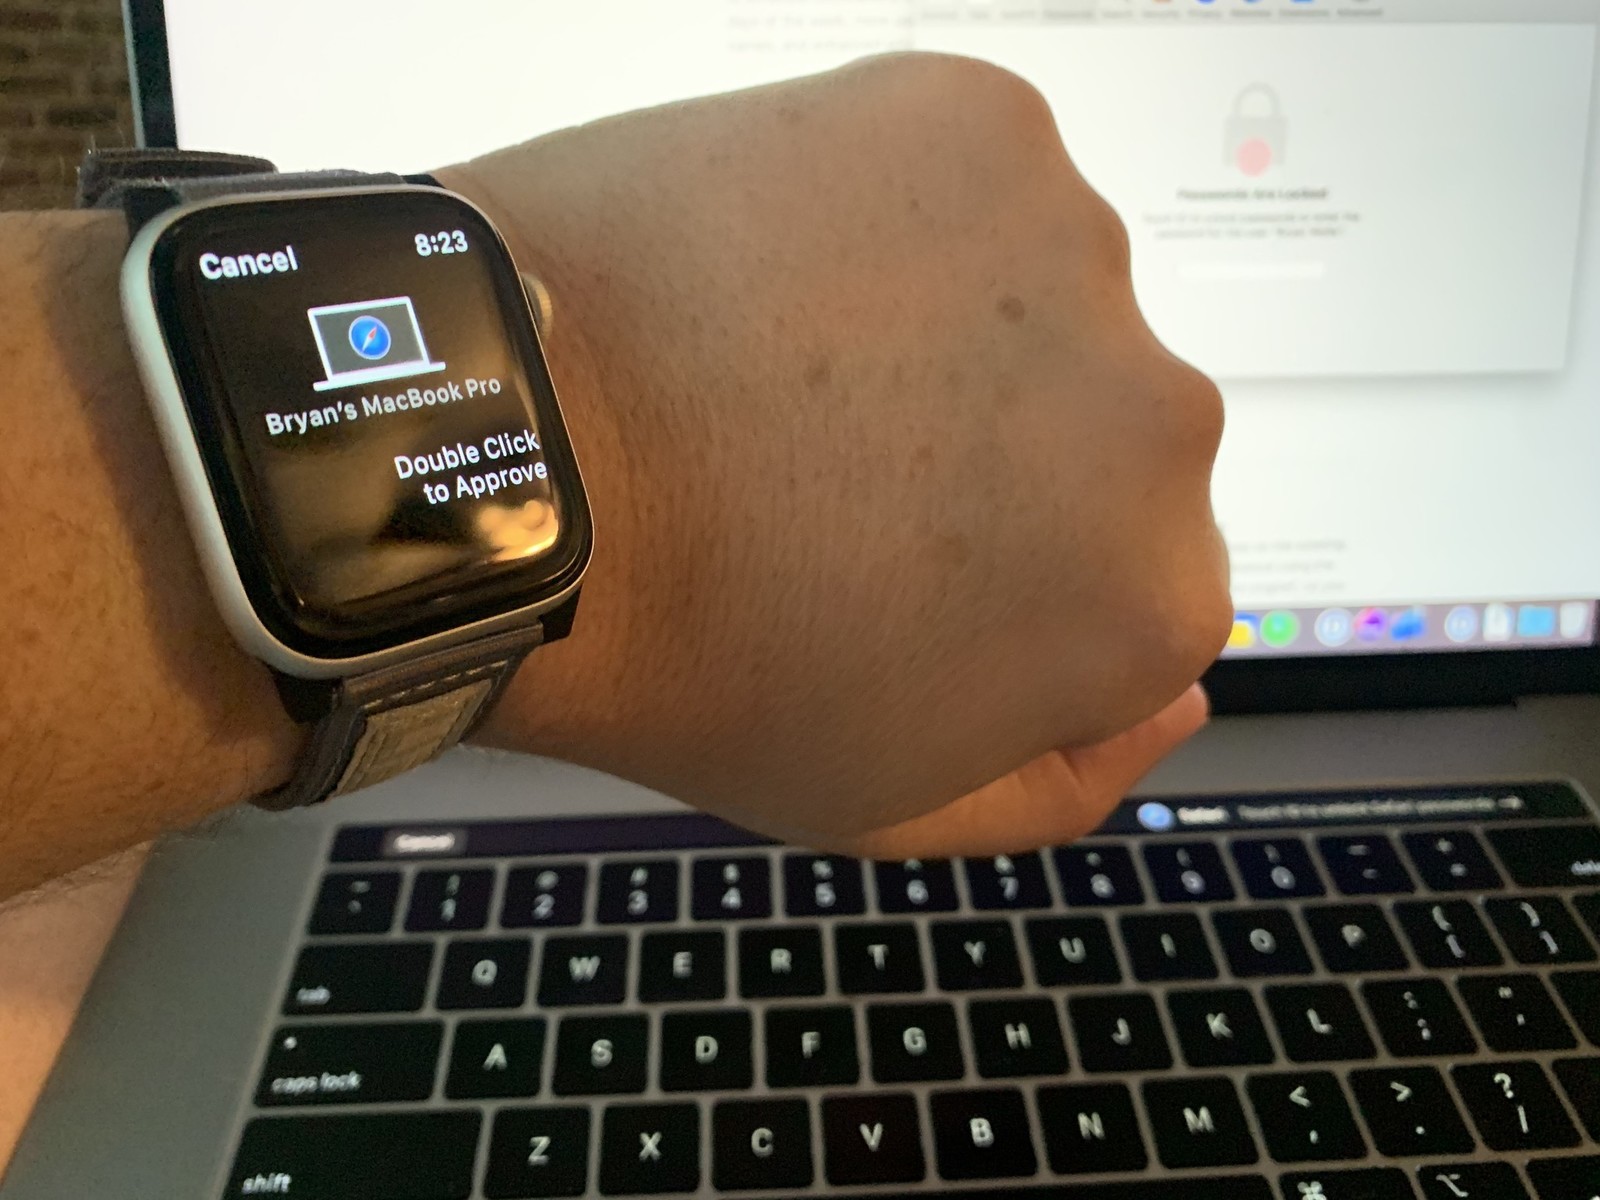 principle for mac apple watch